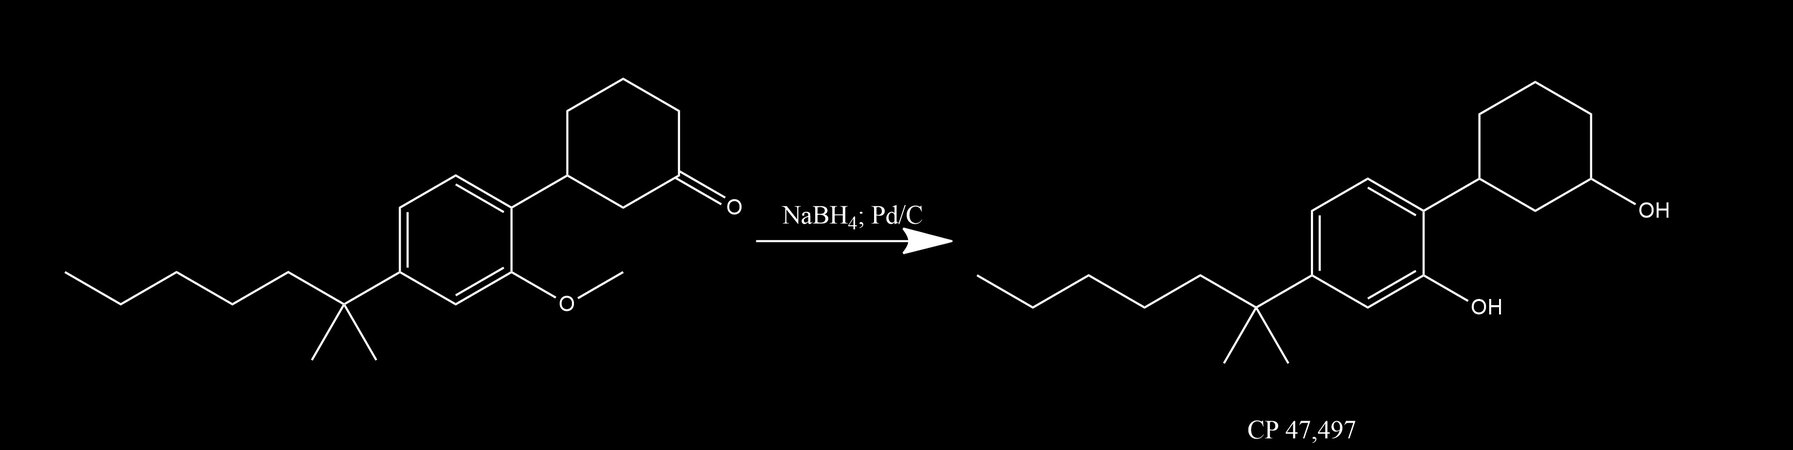 Reduction of 3-2-methoxy-4-1,1-dimethylhexylphenyl cyclohexanone with NaBH4 and Pd C-hydrogen.jpg